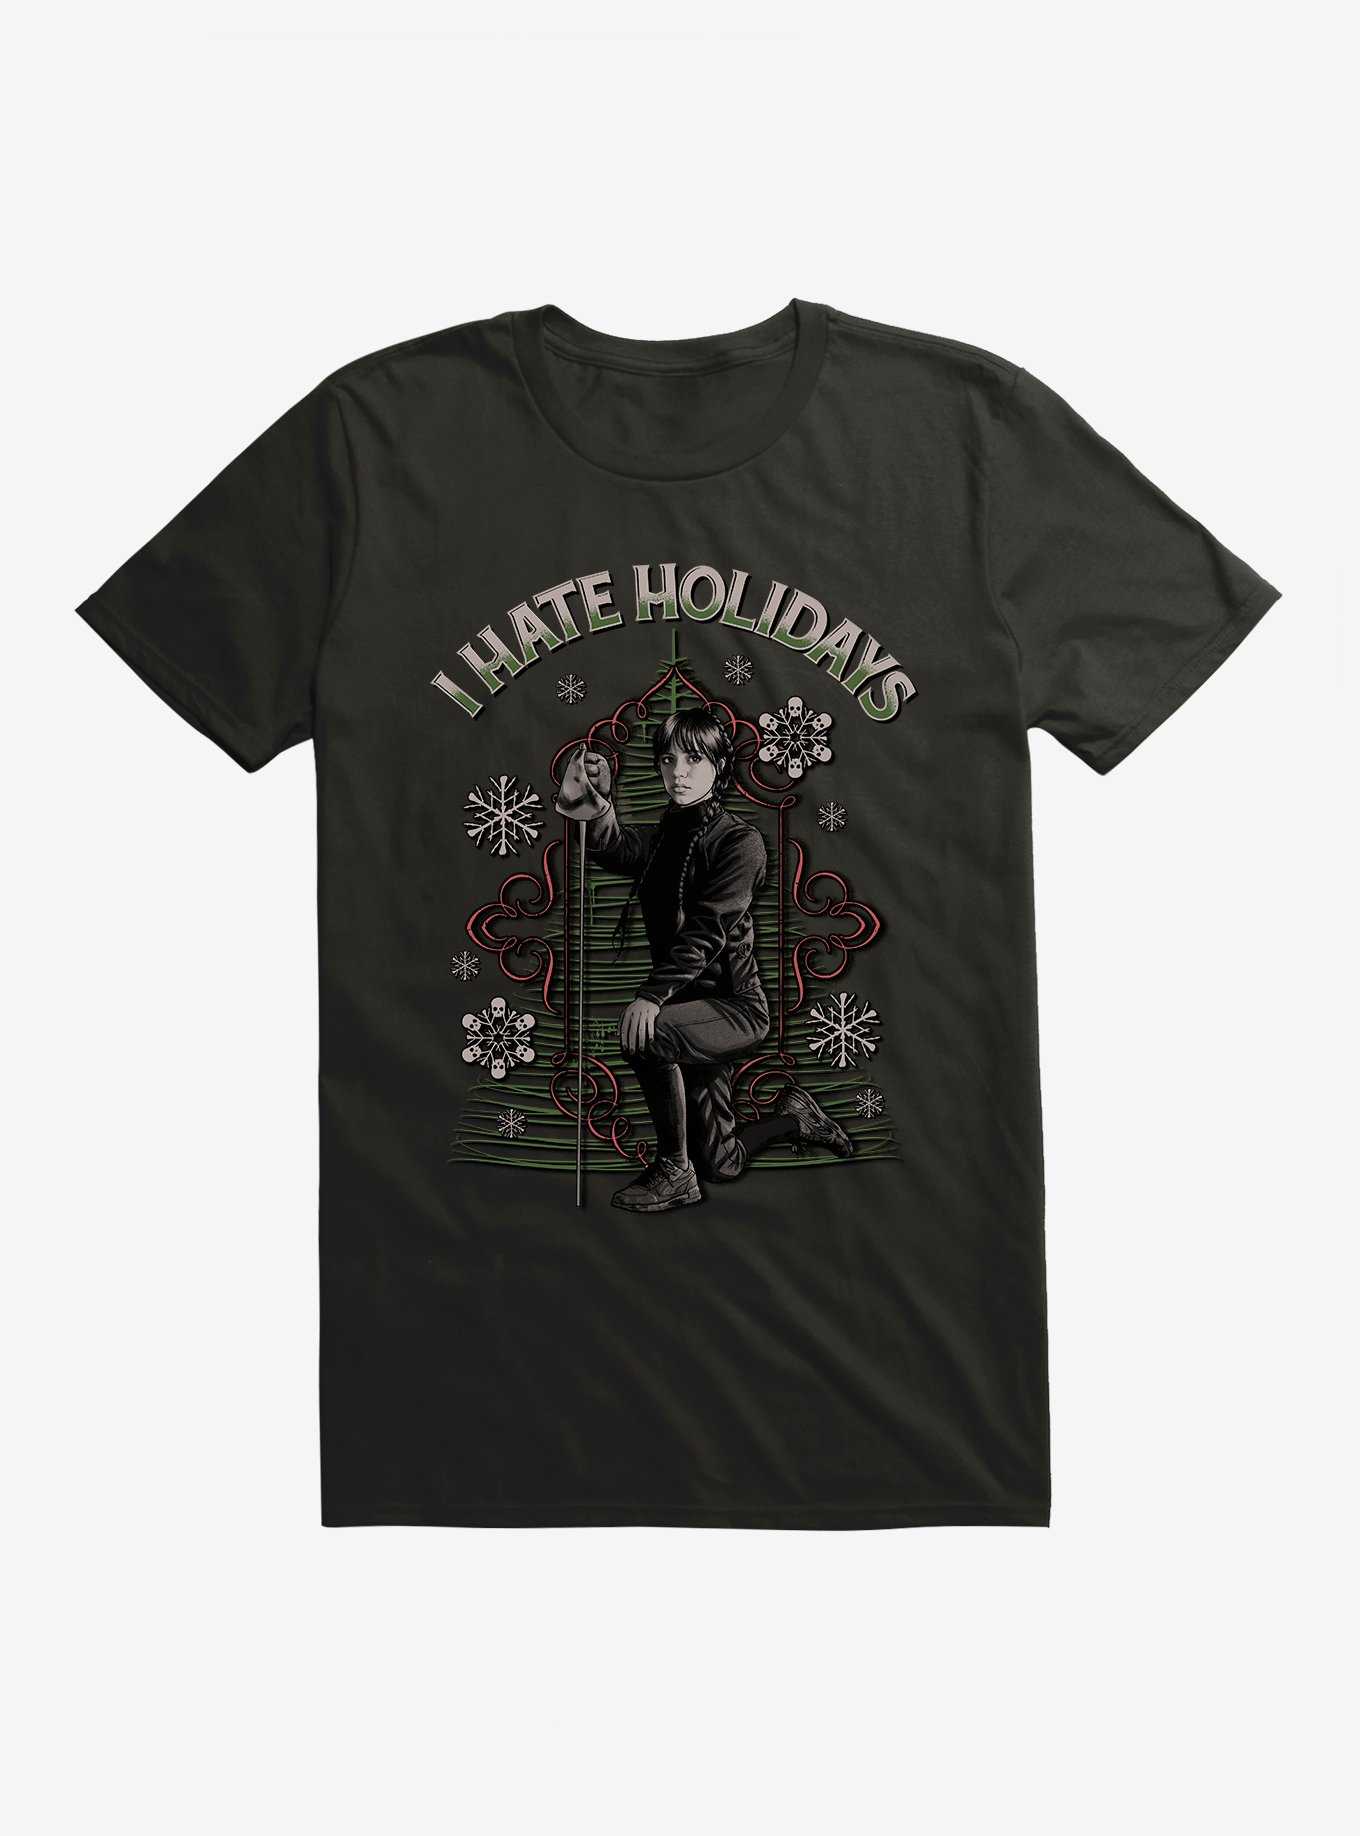 Wednesday I Hate Holidays T-Shirt, , hi-res